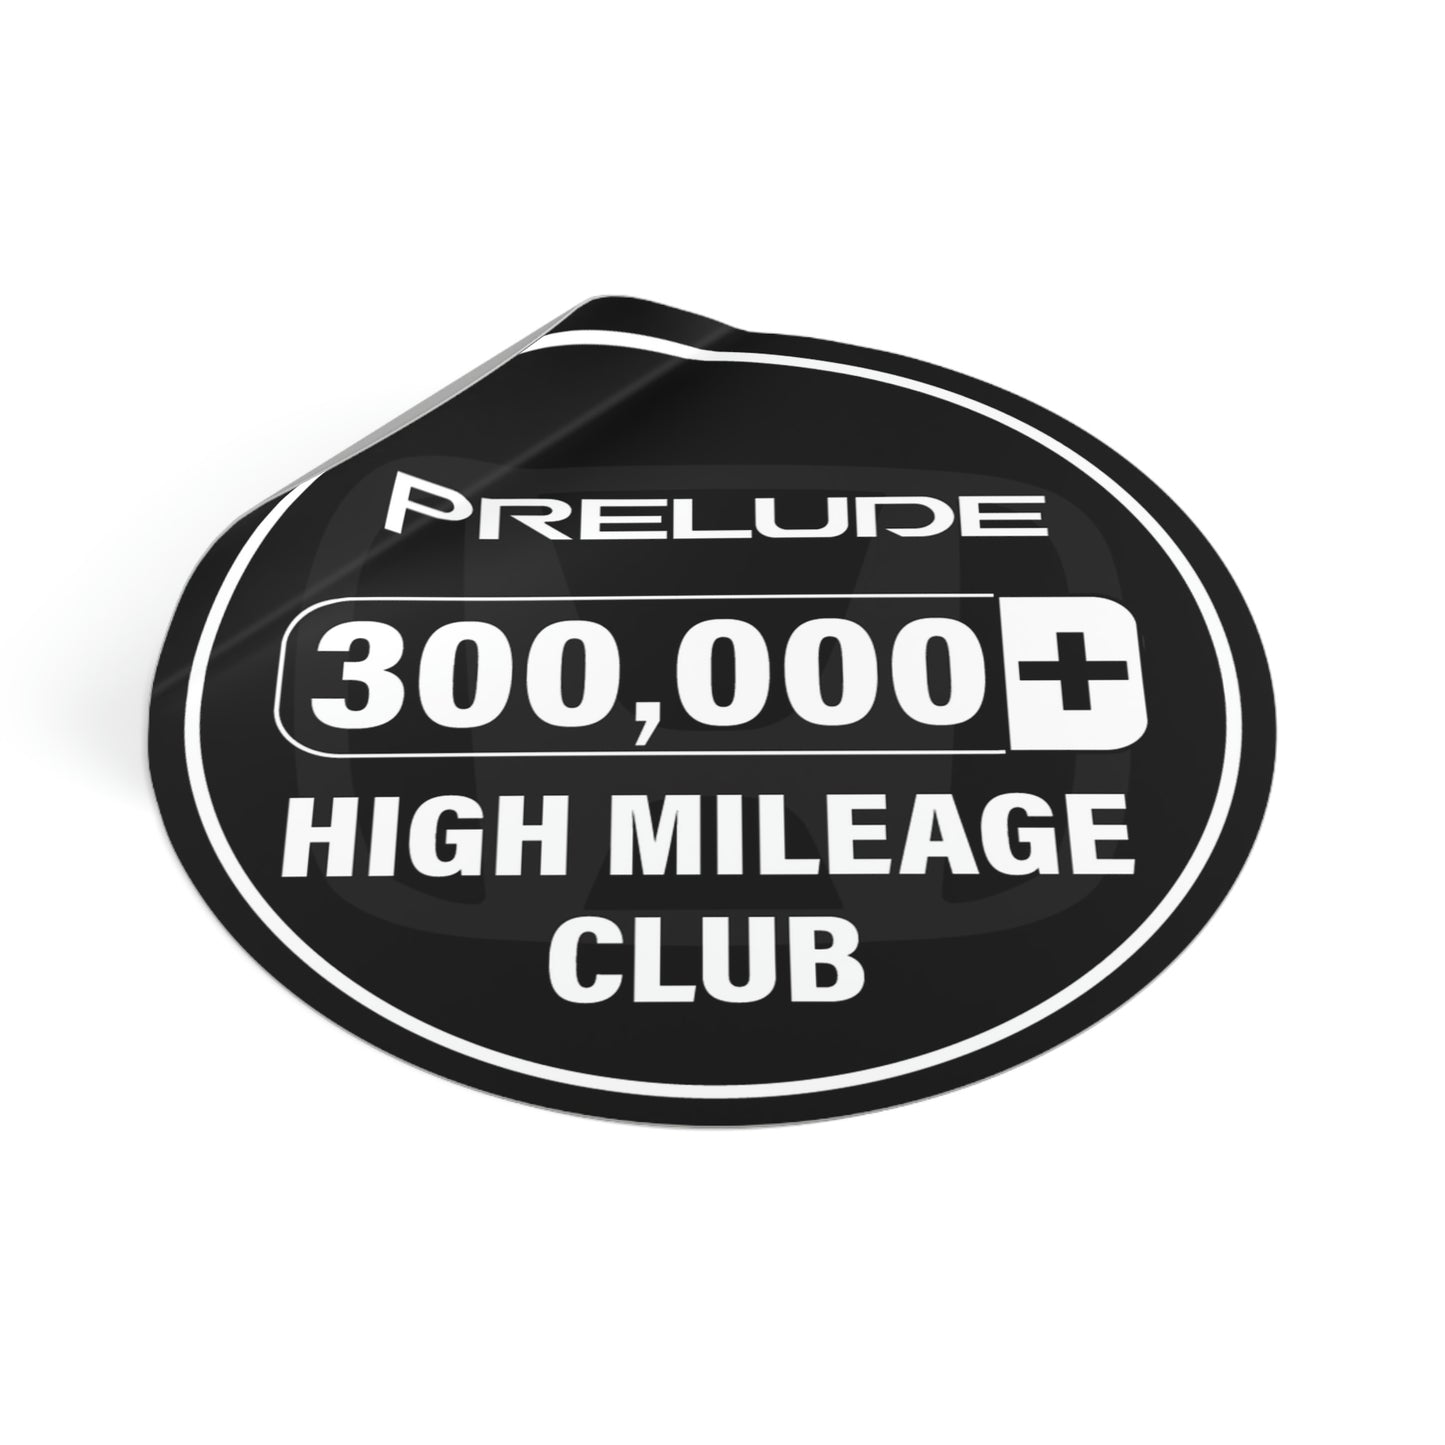 Honda Prelude High Mileage Club 300,000 Sticker/Decal